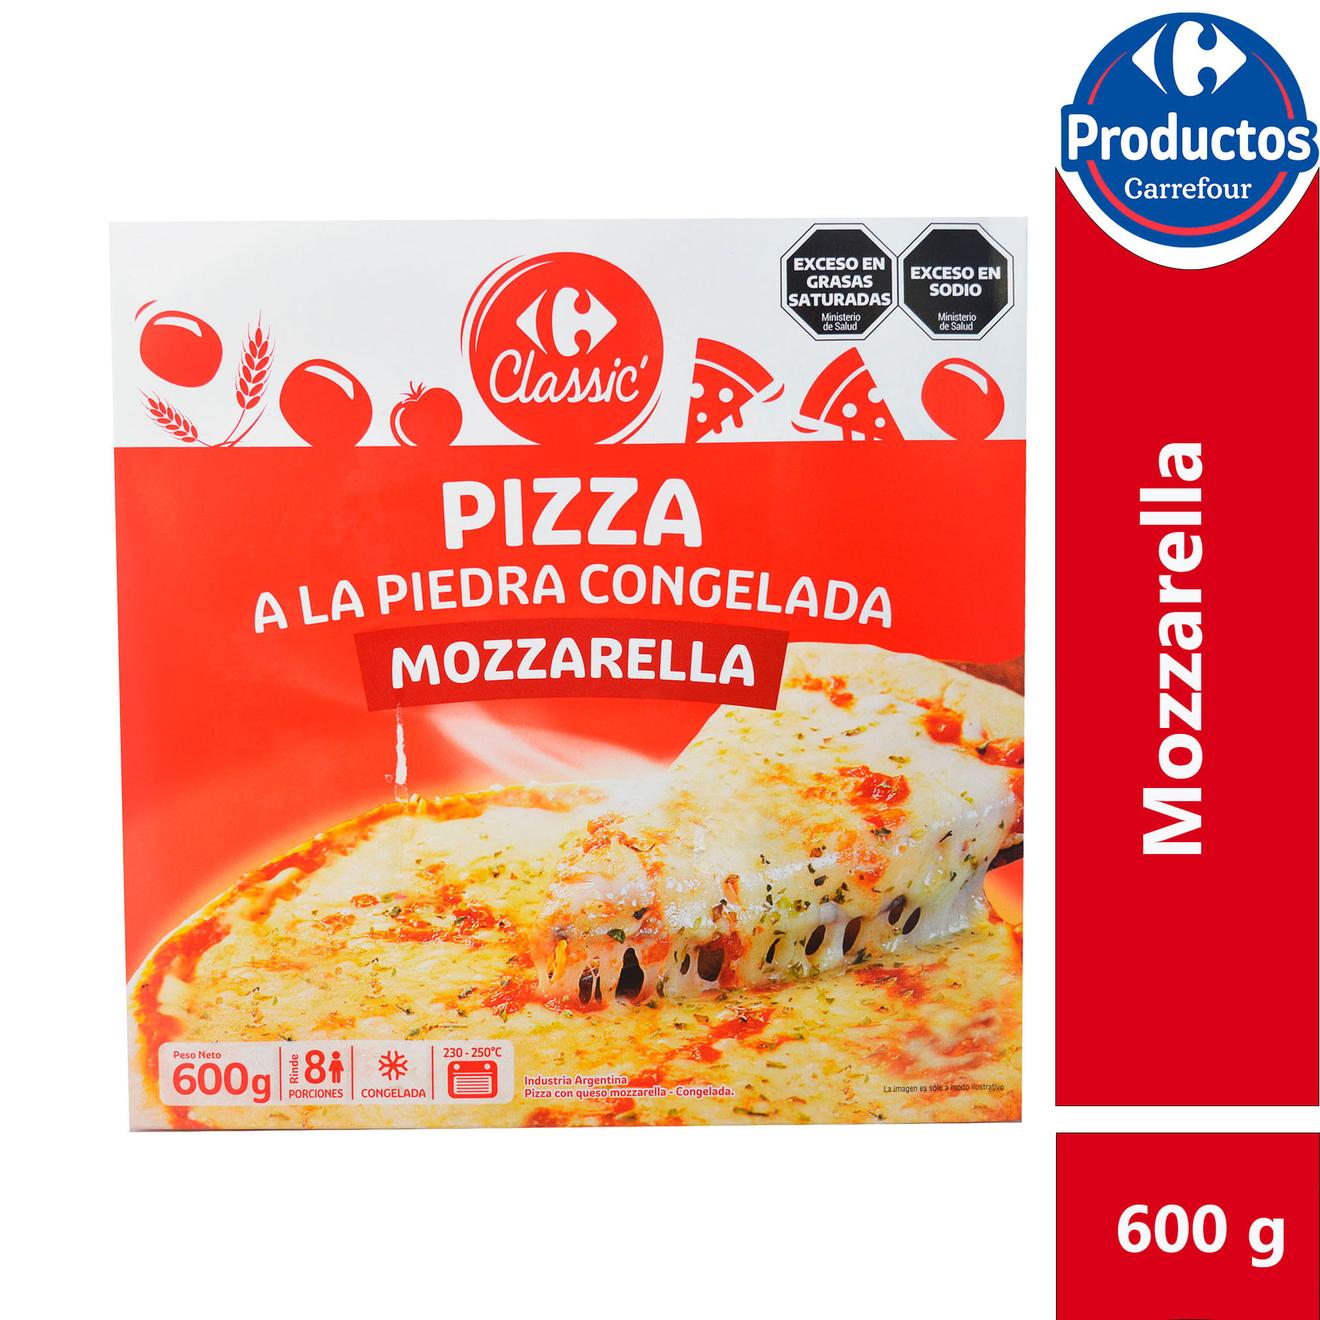 Oferta de Pizza congelada Carrefour mozzarella estuche 600 g. por $3486,8 en Carrefour